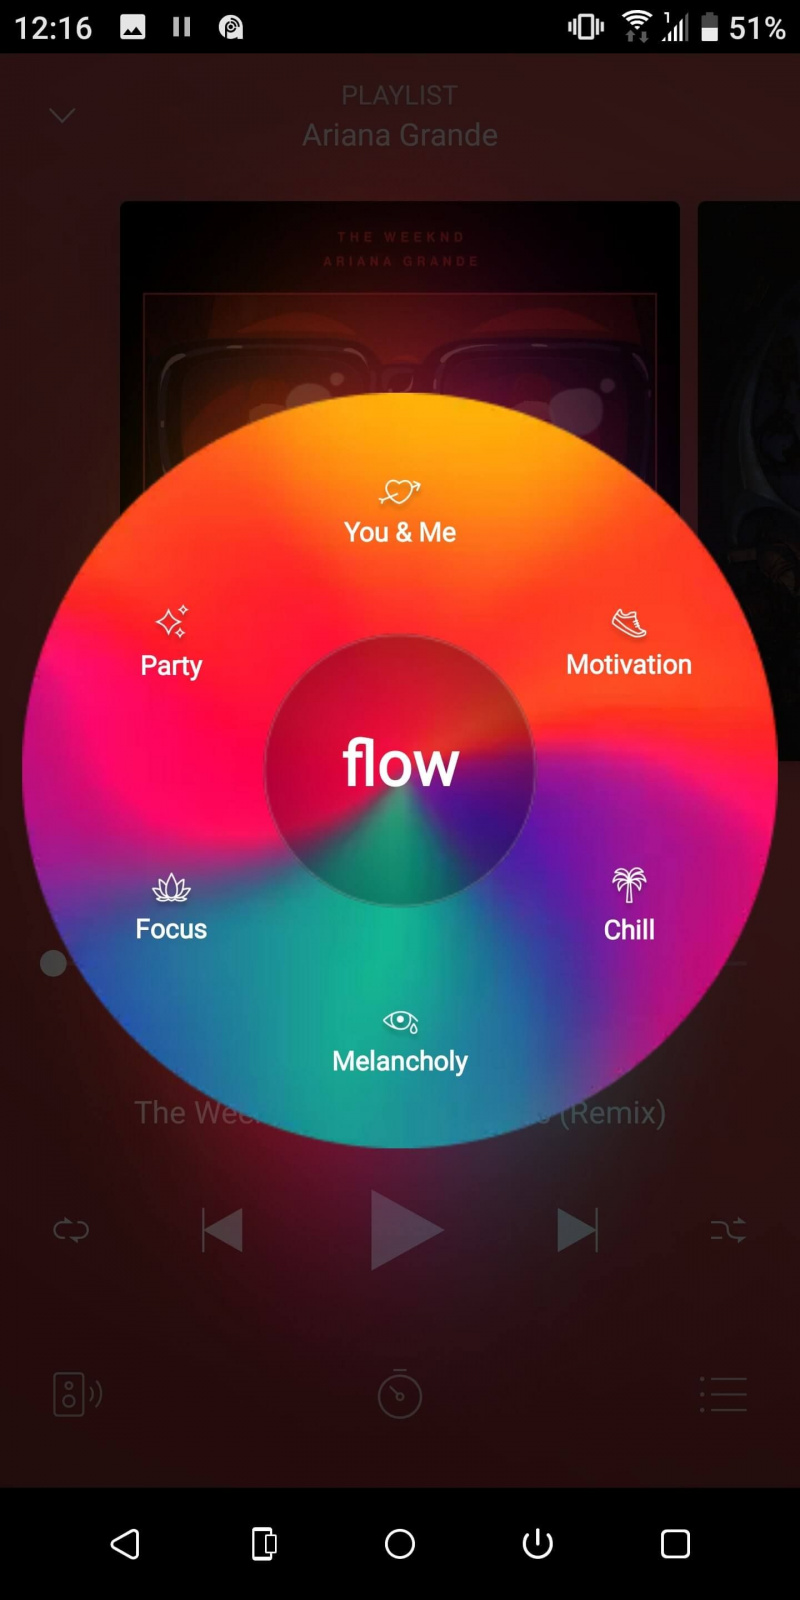   Playlist ng Deezer Flow